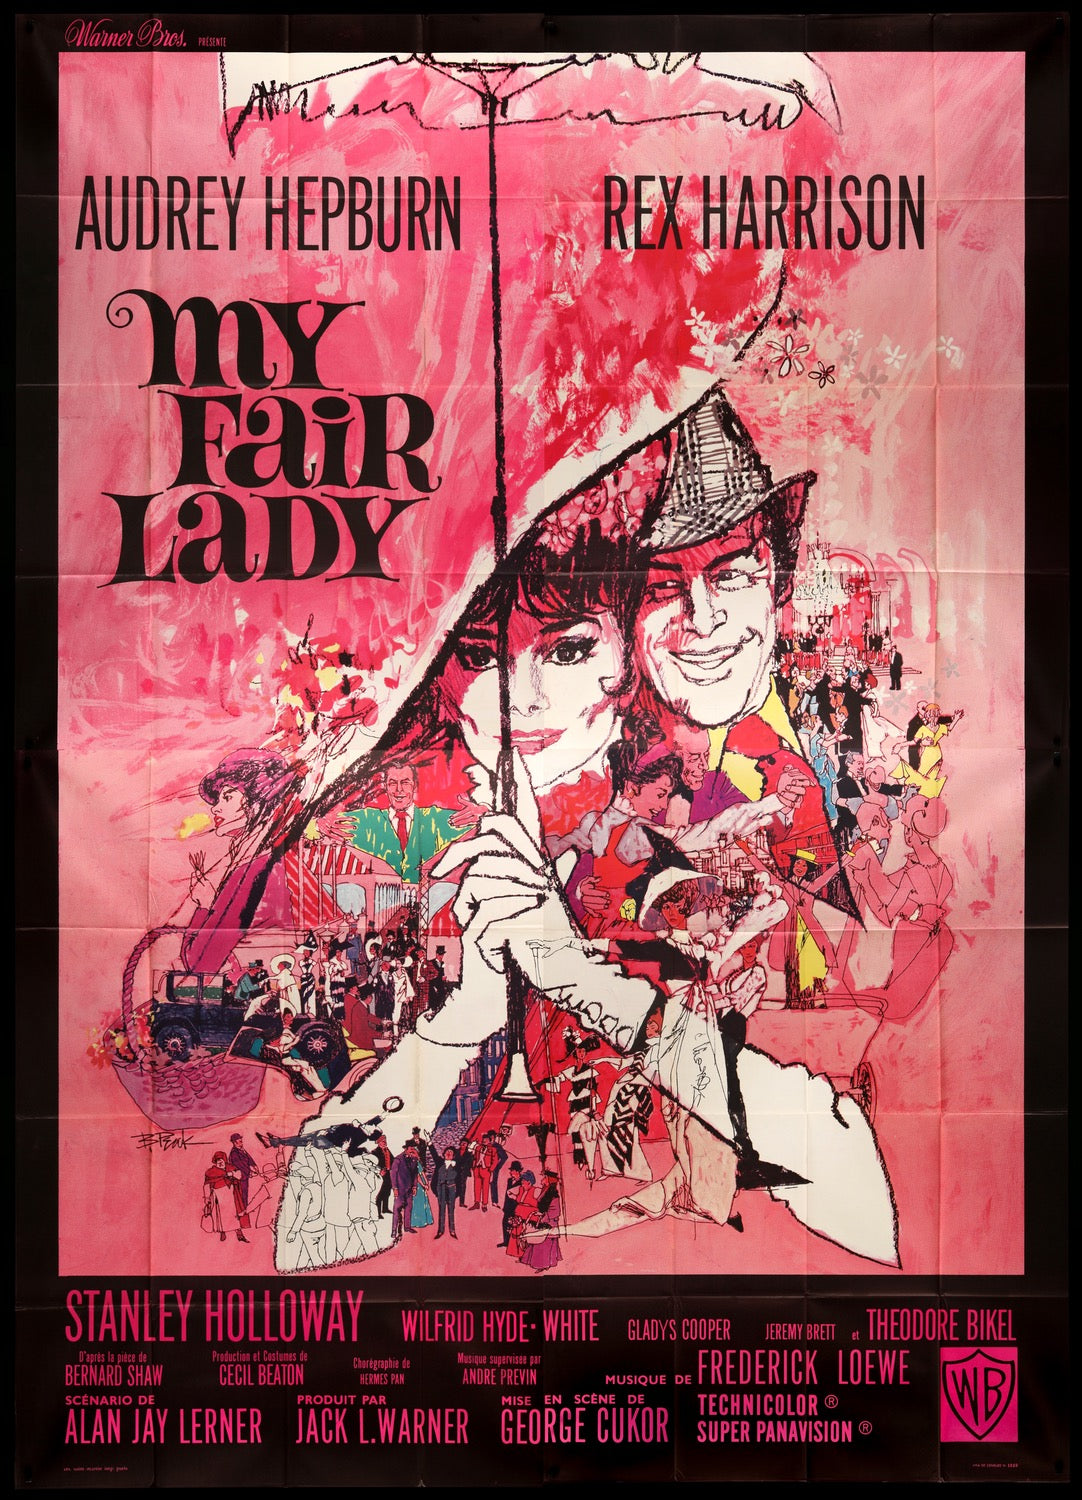 My Fair Lady (1964) original movie poster for sale at Original Film Art